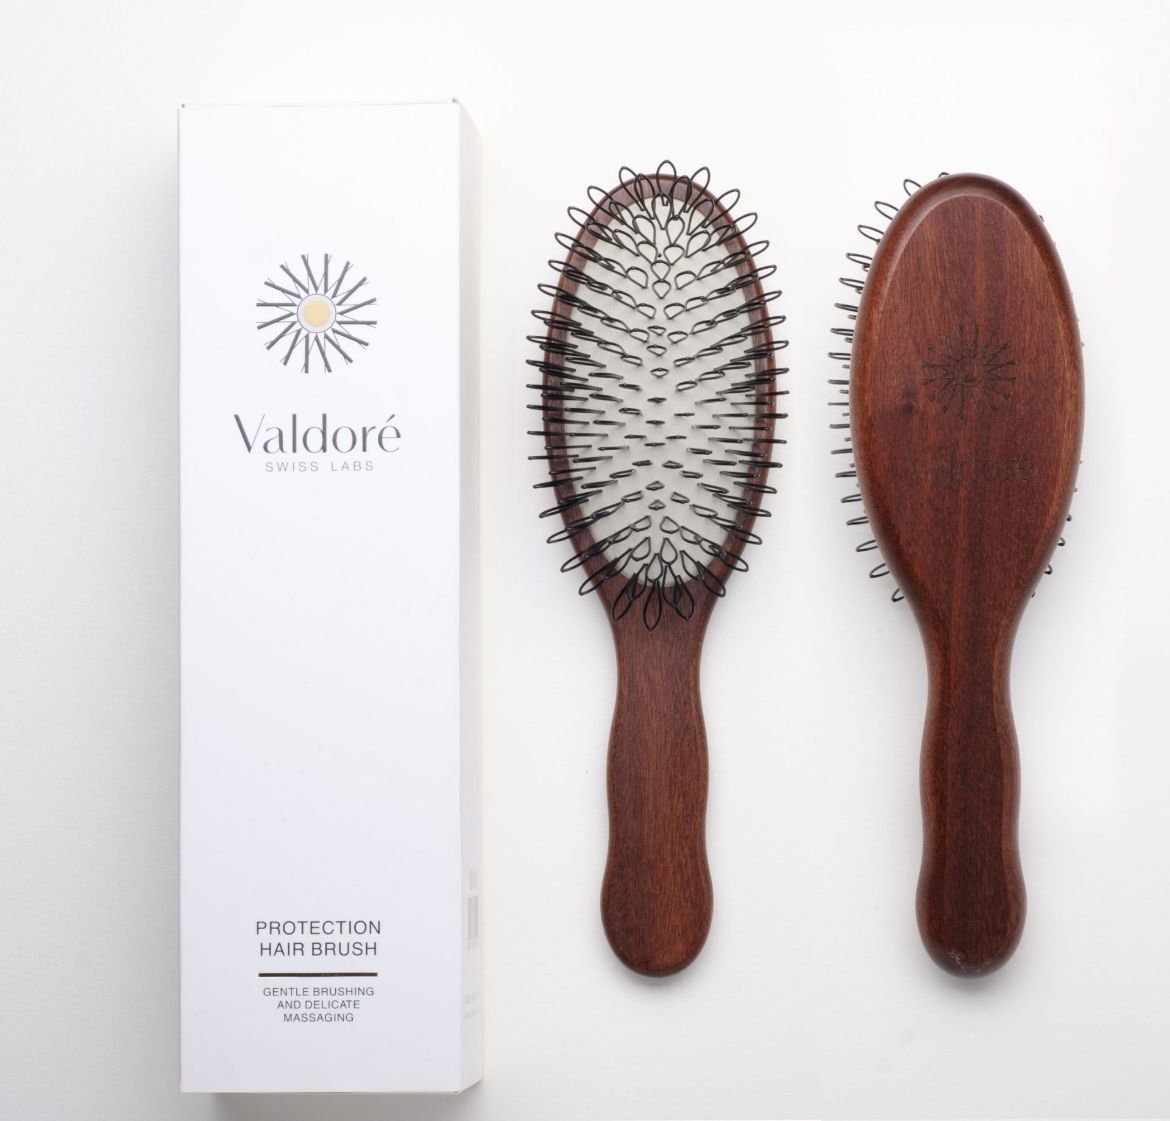 Image of Valdoré Protection Hair Brush